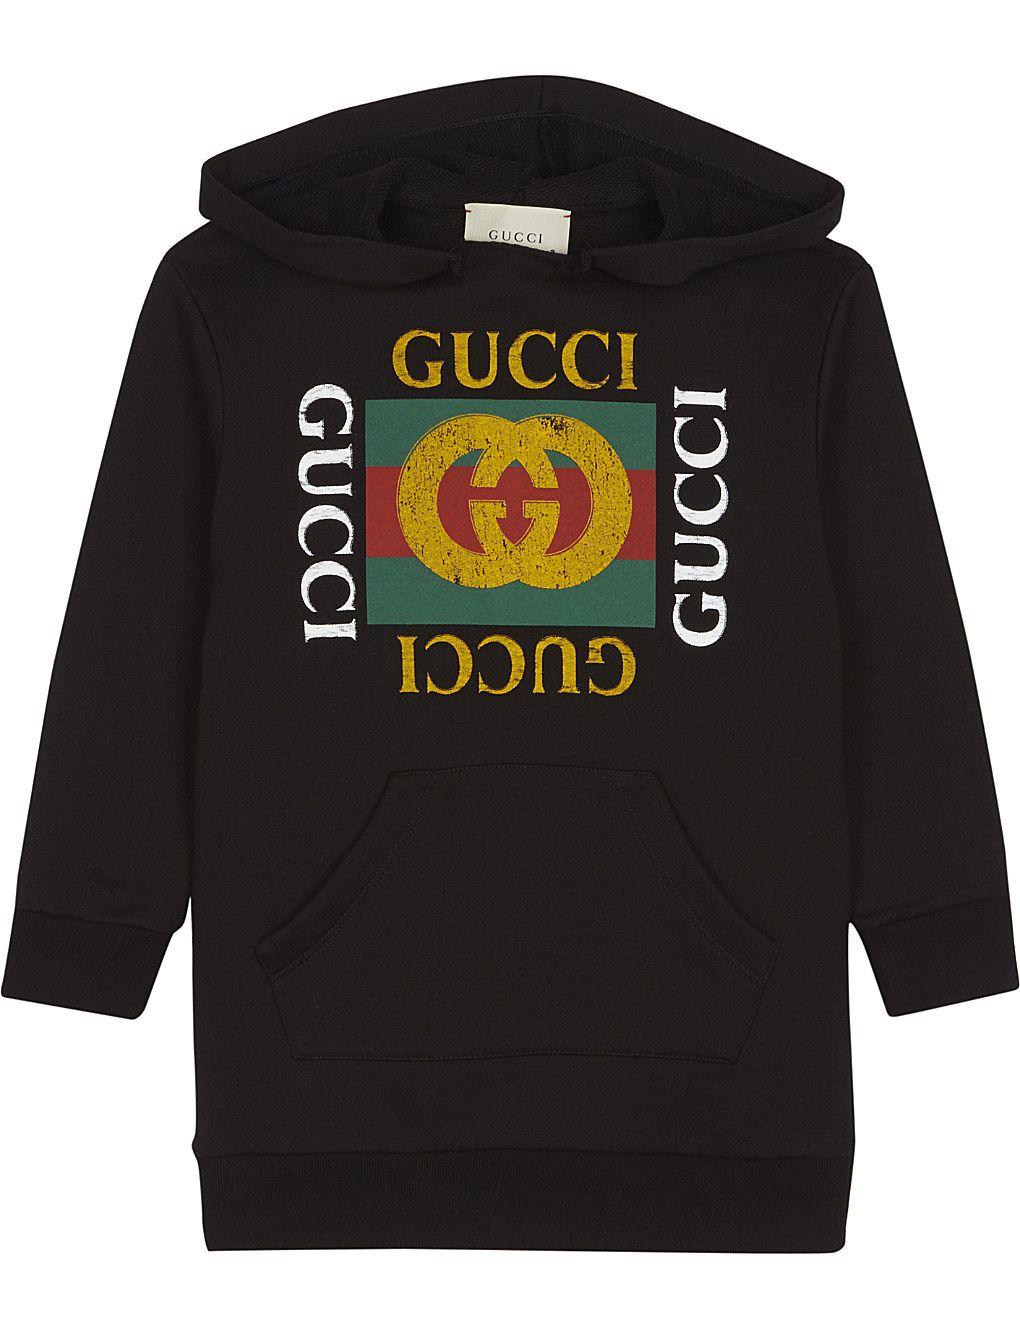 Gucci Clothing Logo - GUCCI - Logo print hooded sweatshirt dress 4-12 years | Selfridges.com